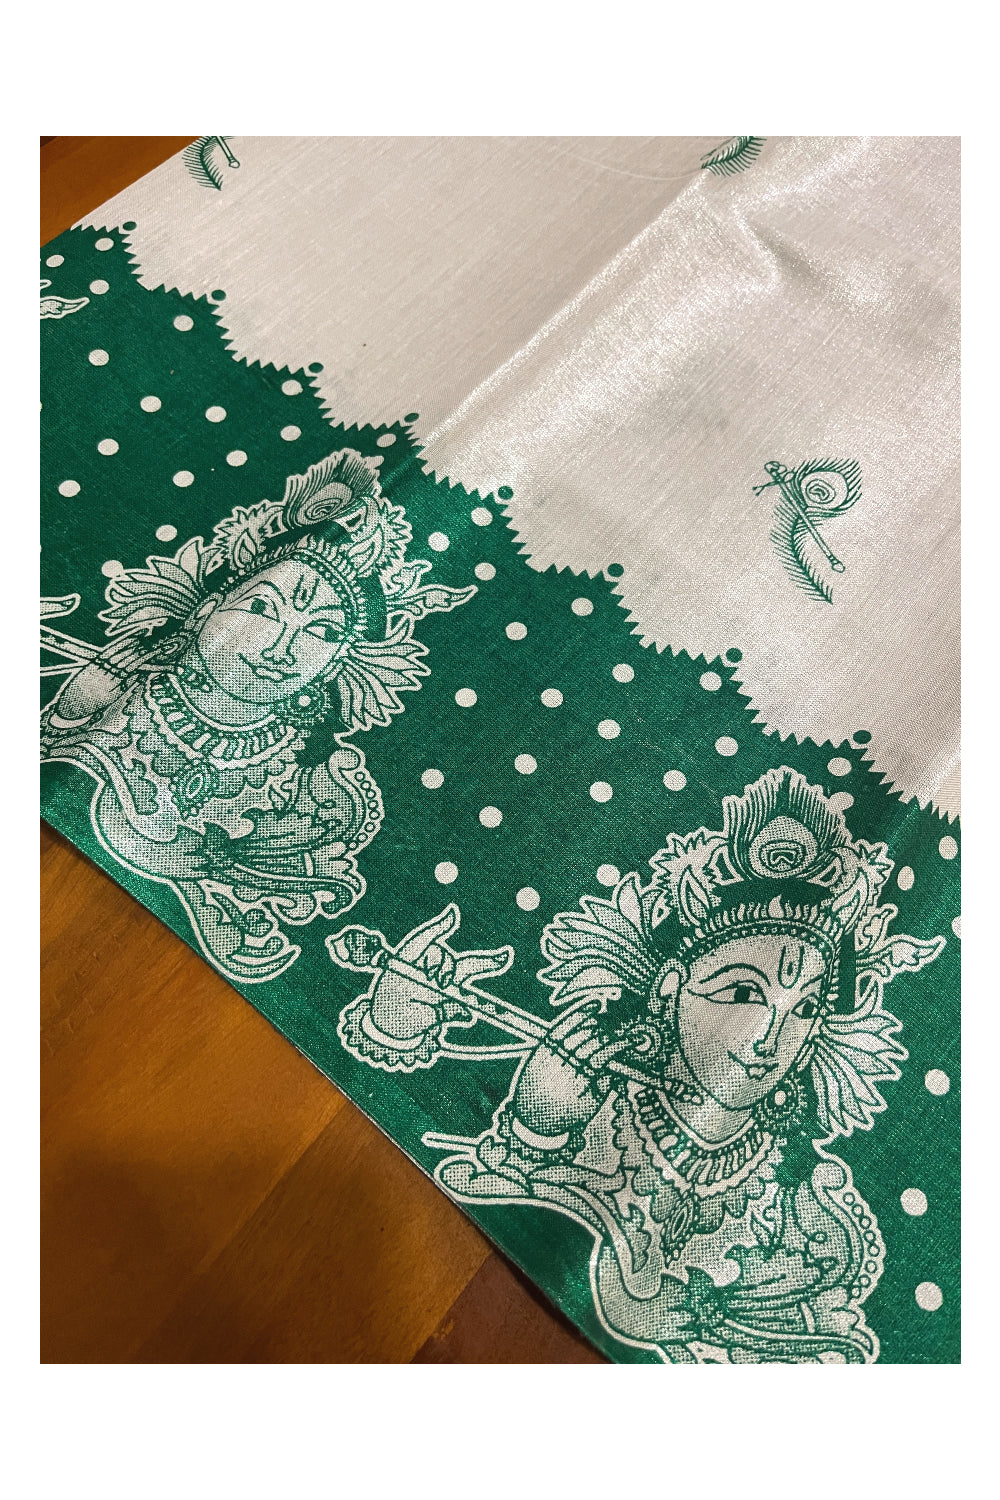 Kerala Silver Tissue Block Printed Pavada and Green Designer Blouse Material for Kids/Girls 4.3 Meters